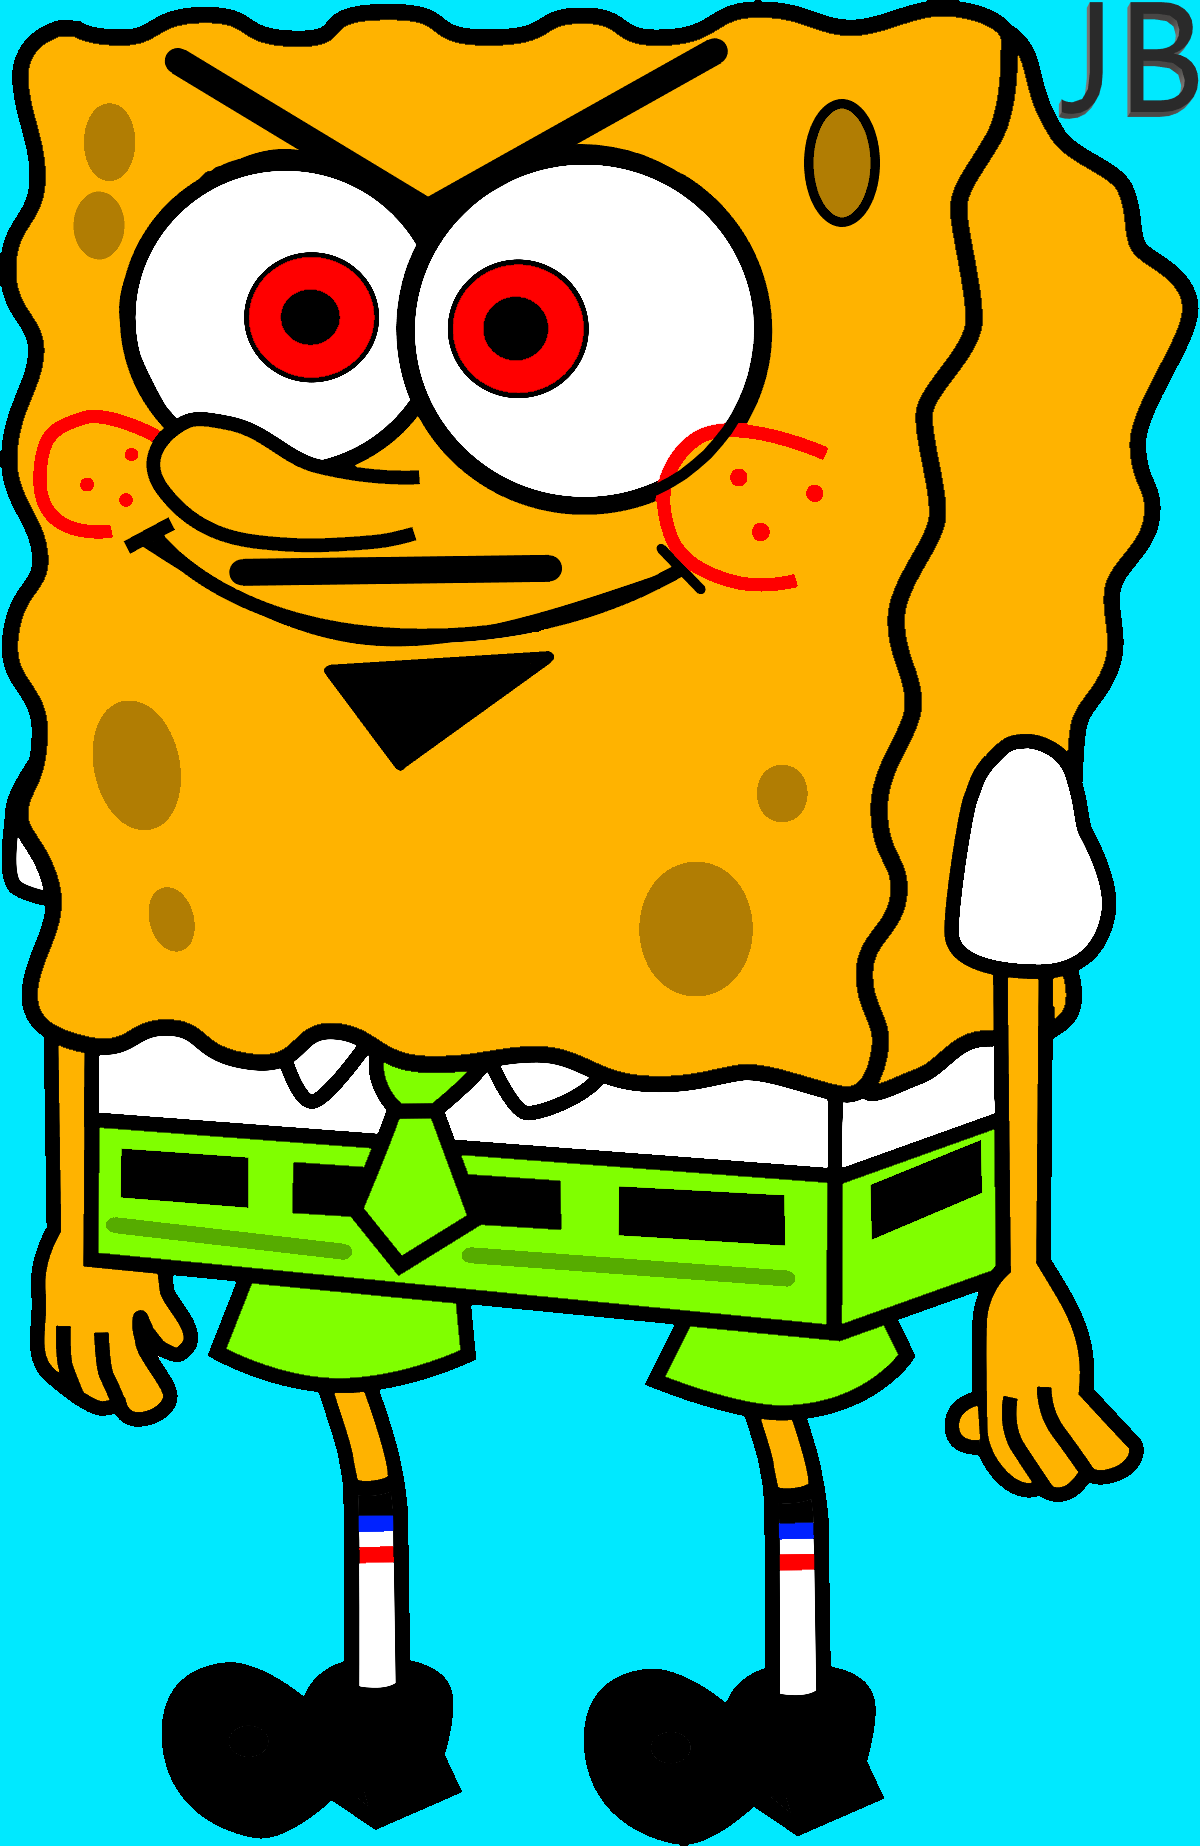 fypdongggggggg #foryoupagethis #sponge #bob #square #pants